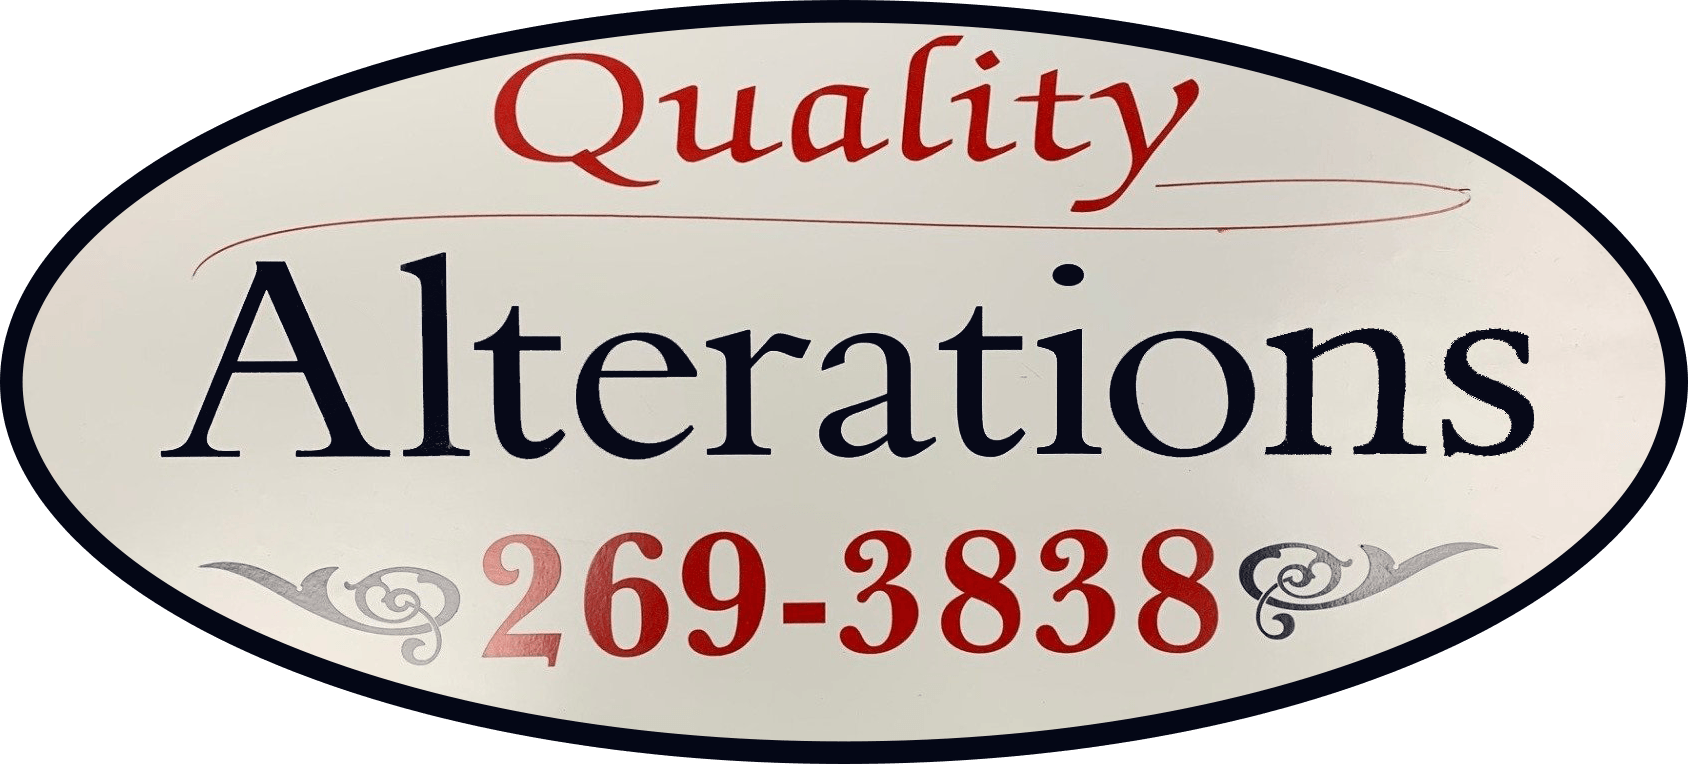 Quality Alterations - logo